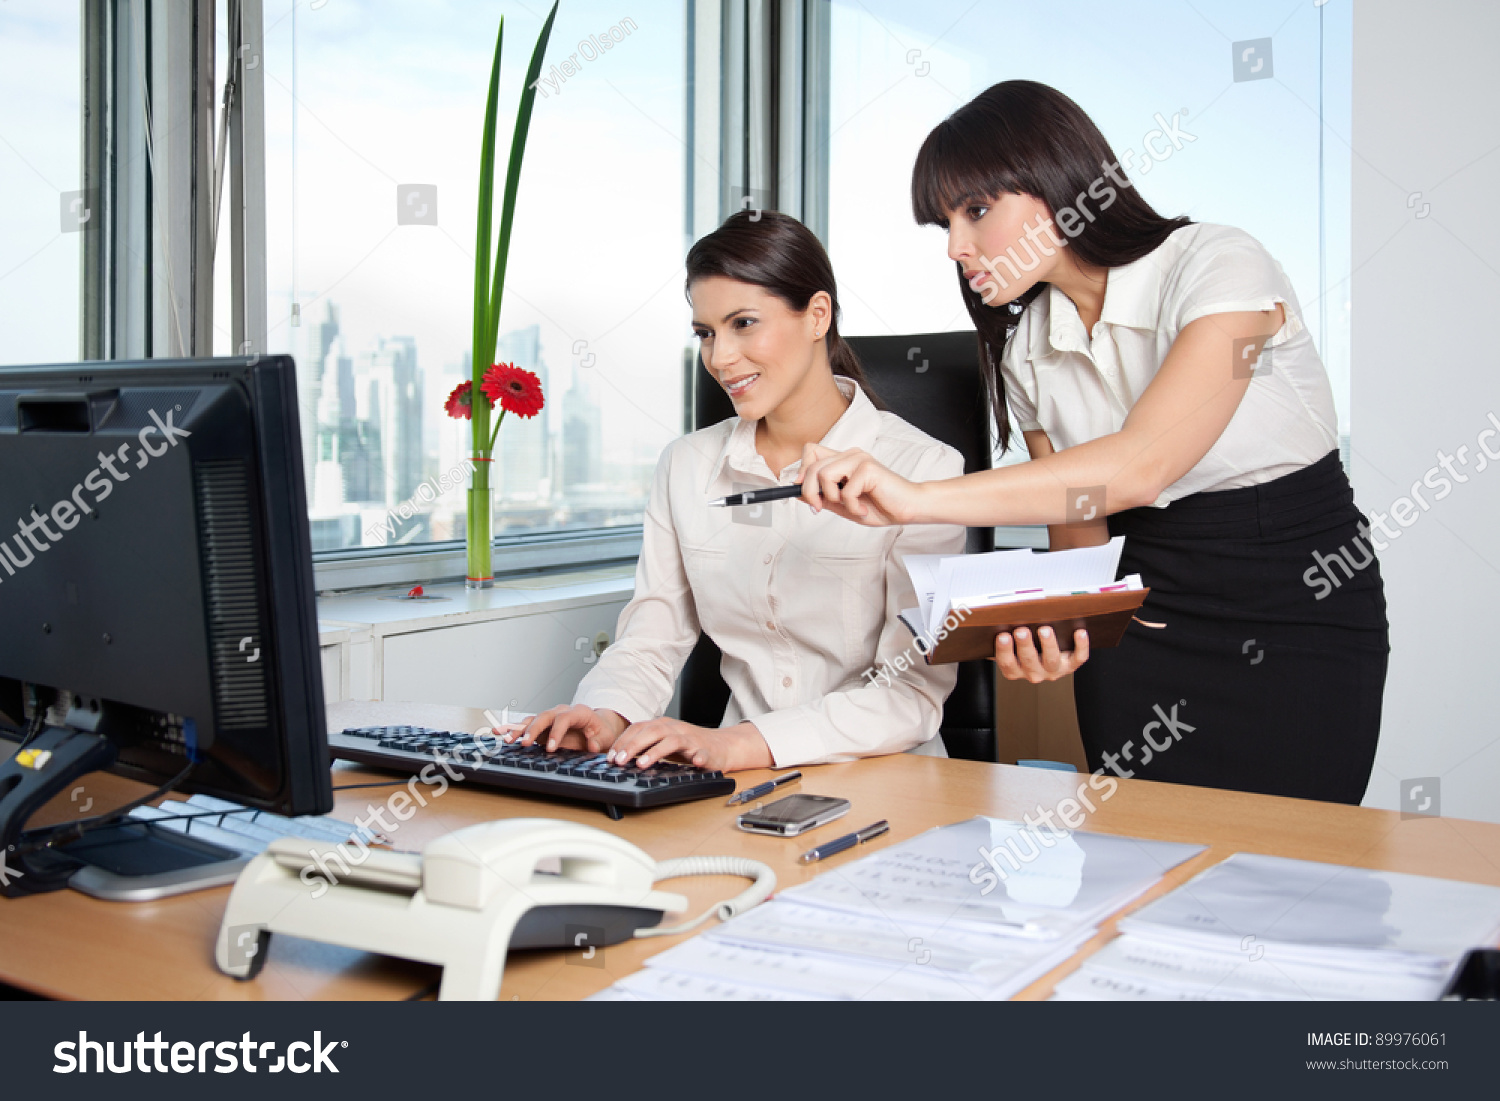 http://image.shutterstock.com/z/stock-photo-two-female-business-women-in-office-setting-working-89976061.jpg